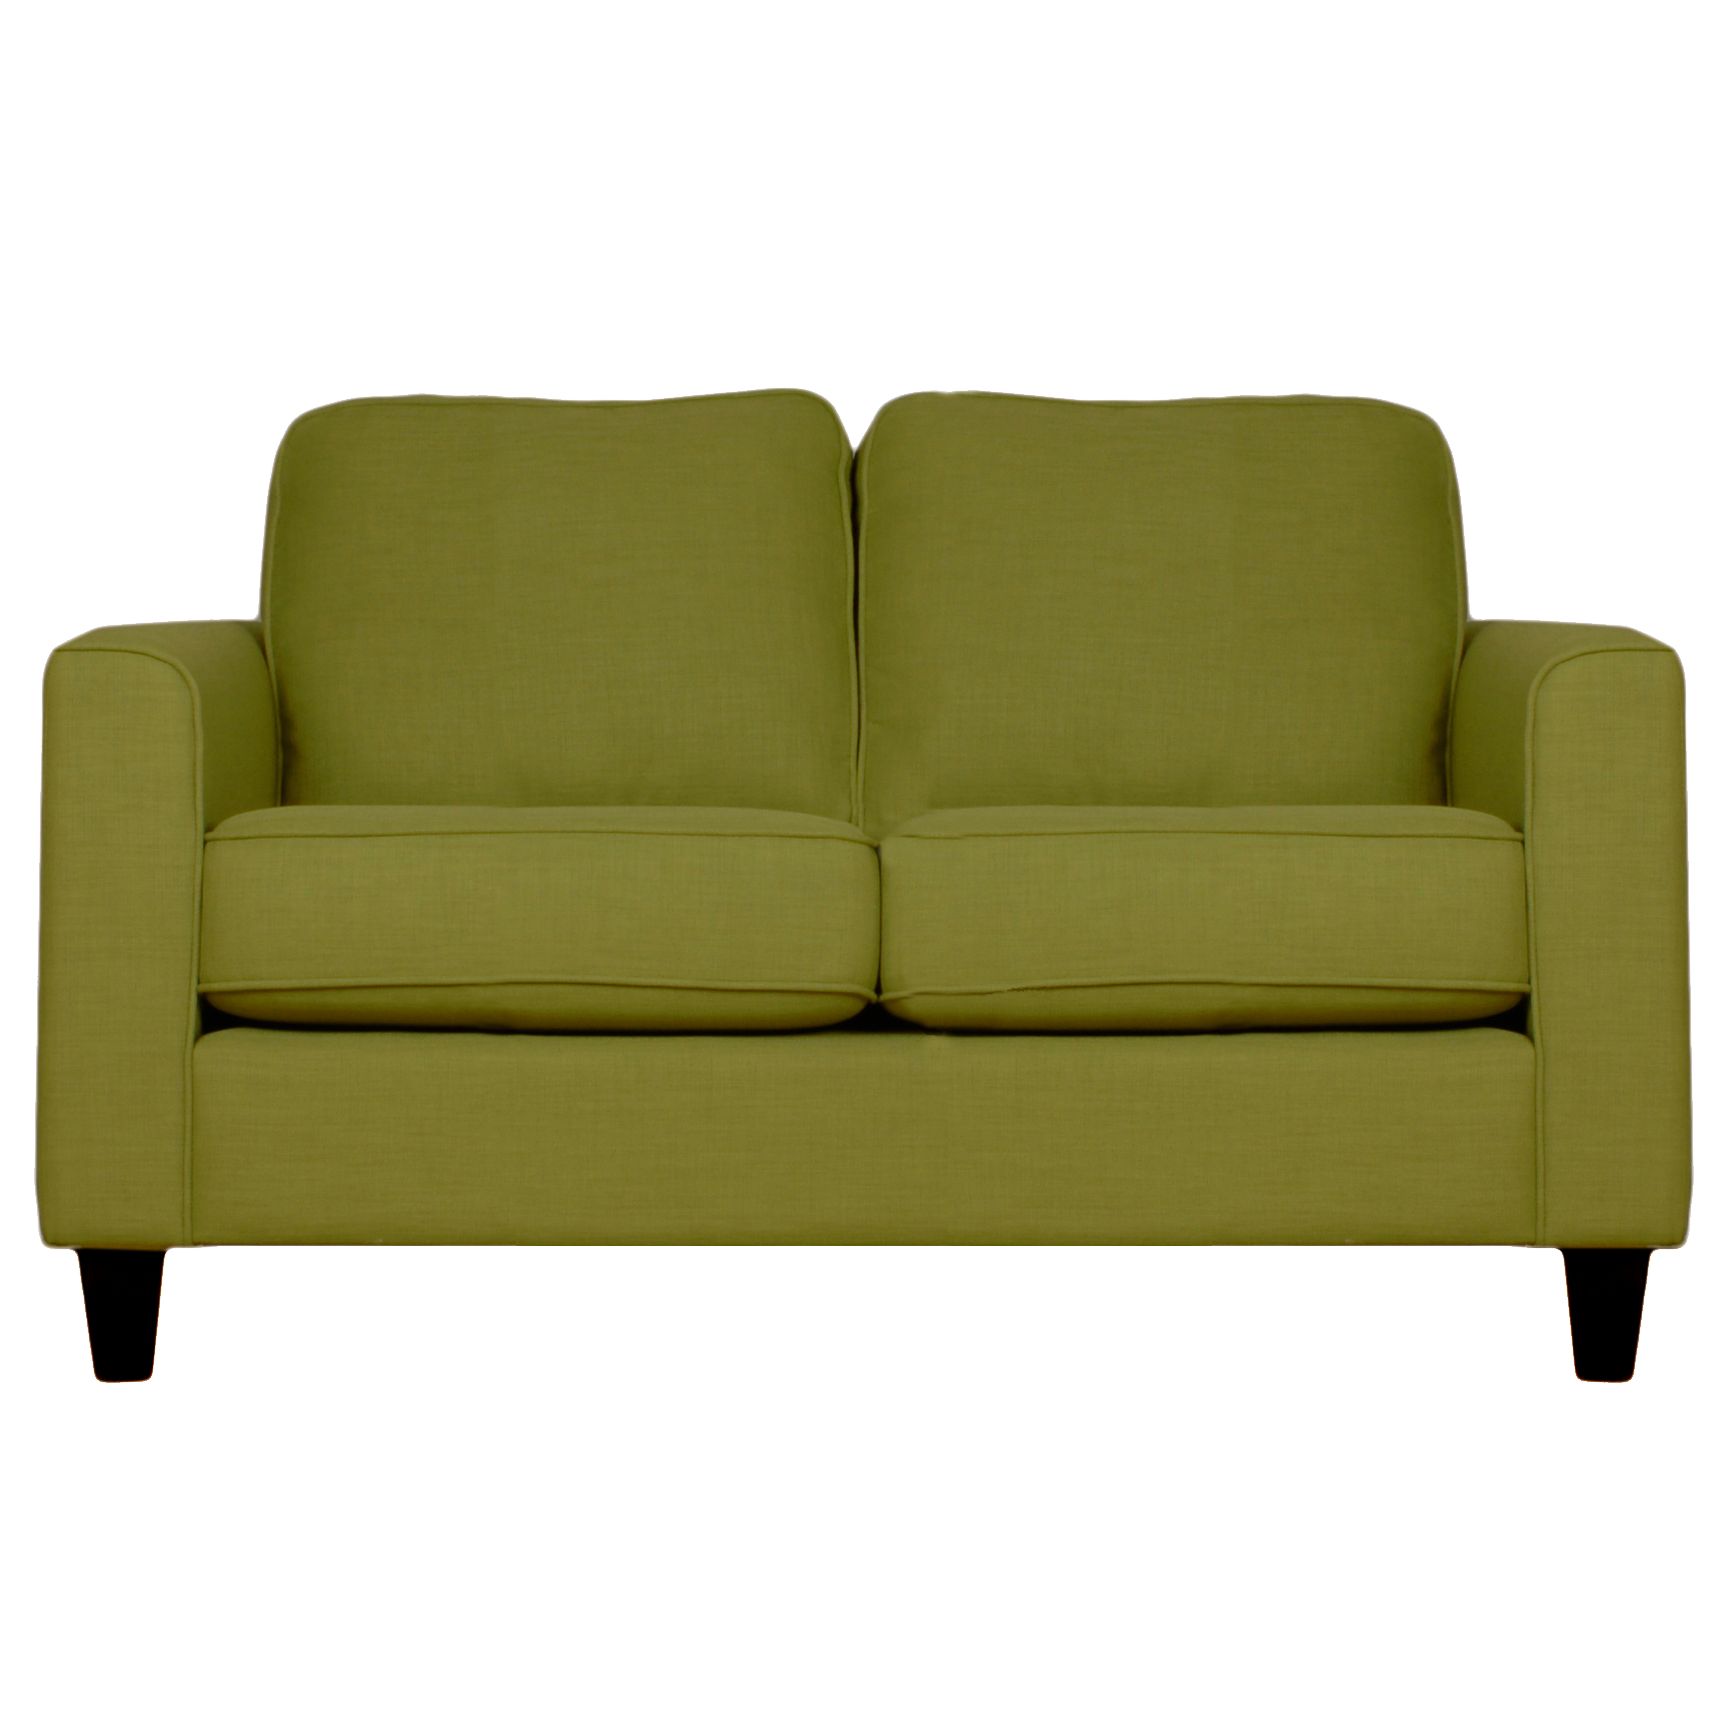 John Lewis Portia Small Sofa, Olive / Dark Leg, width 136cm